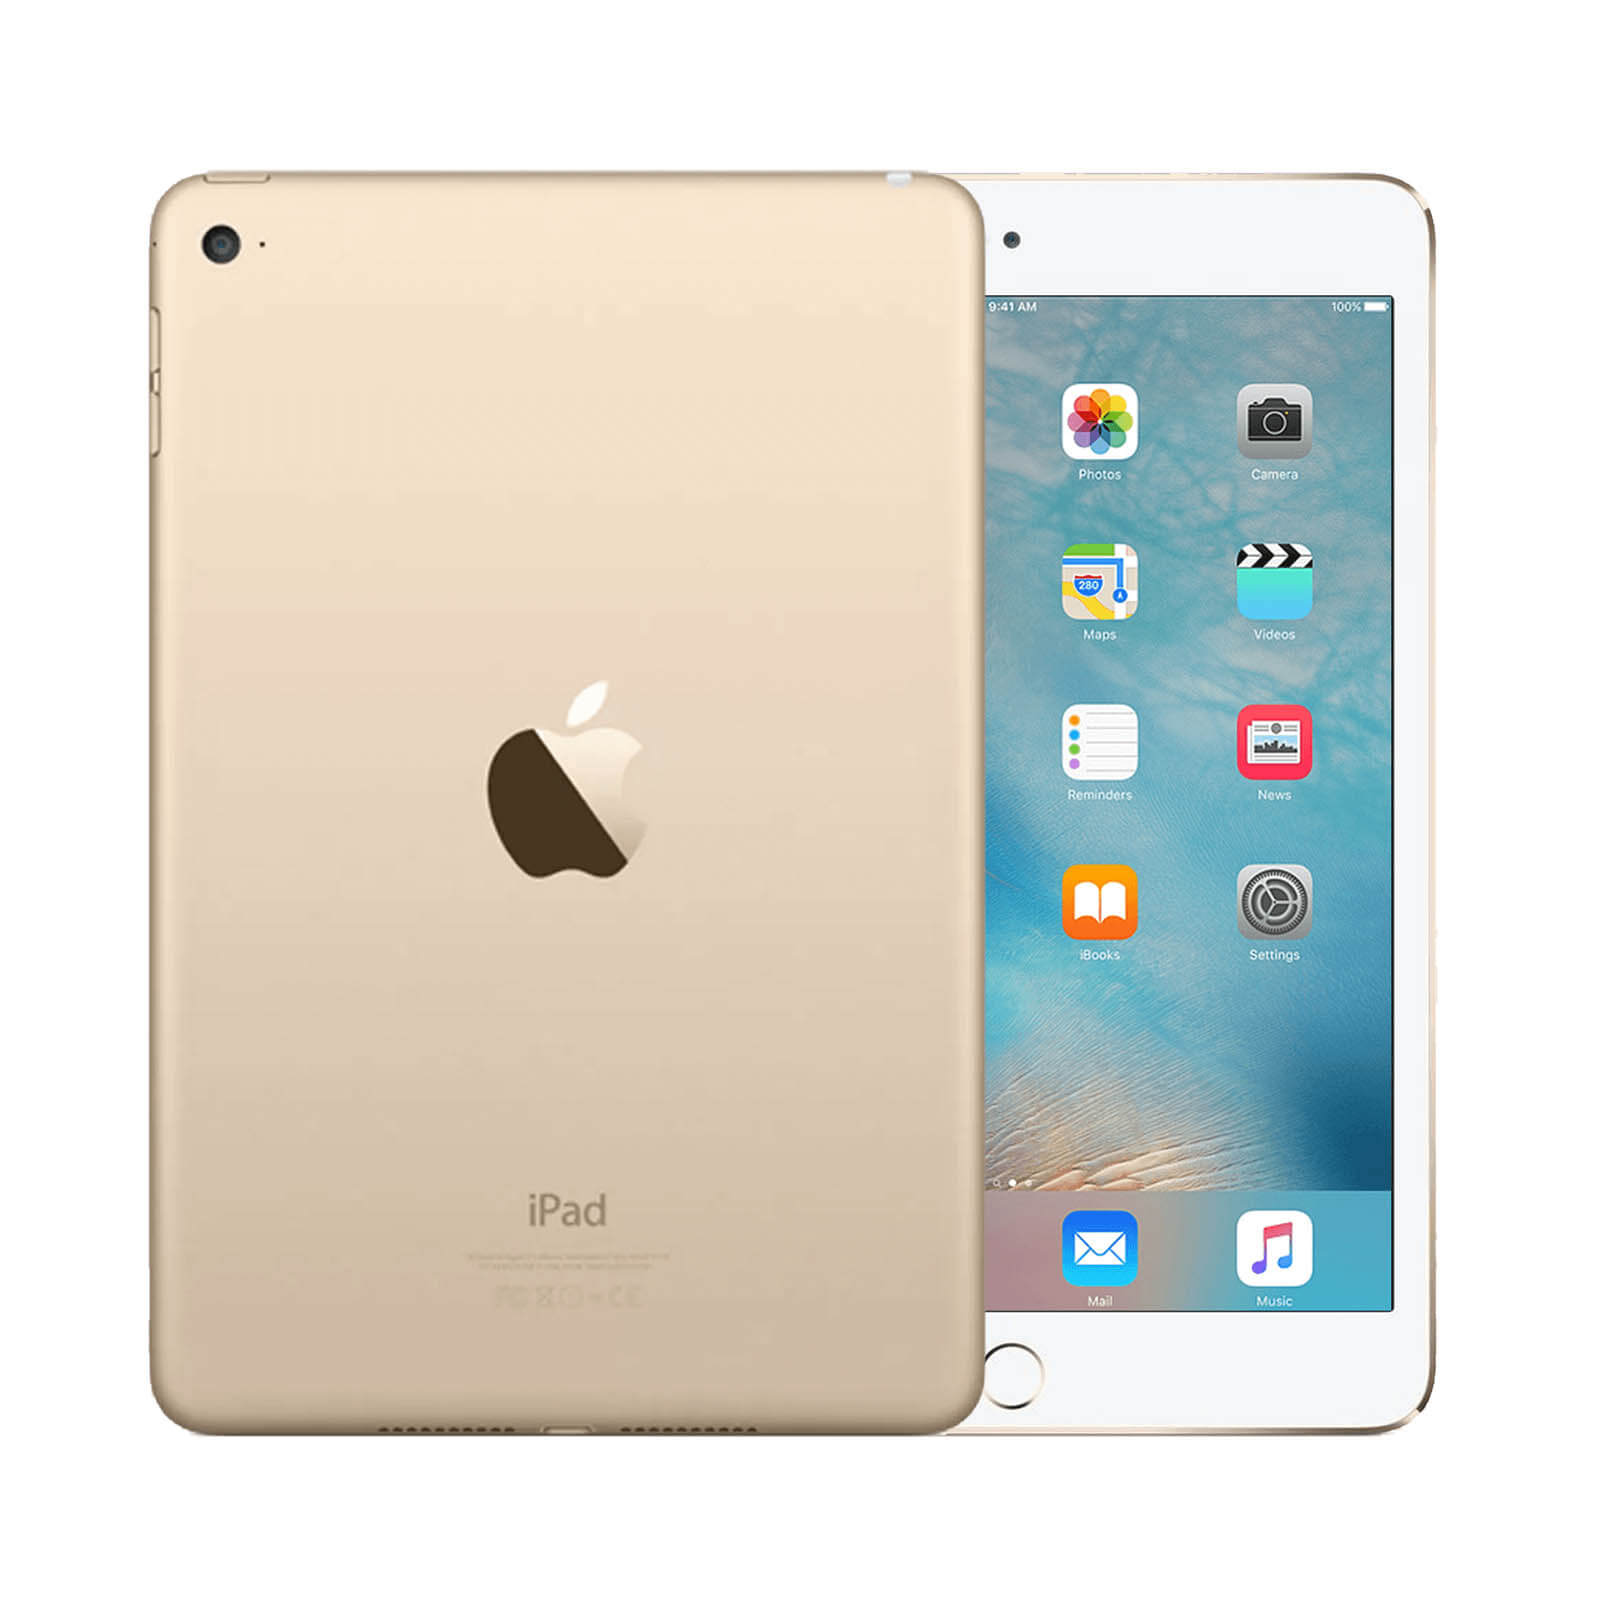 Apple iPad Mini 4 64GB Gold WiFi - Fair